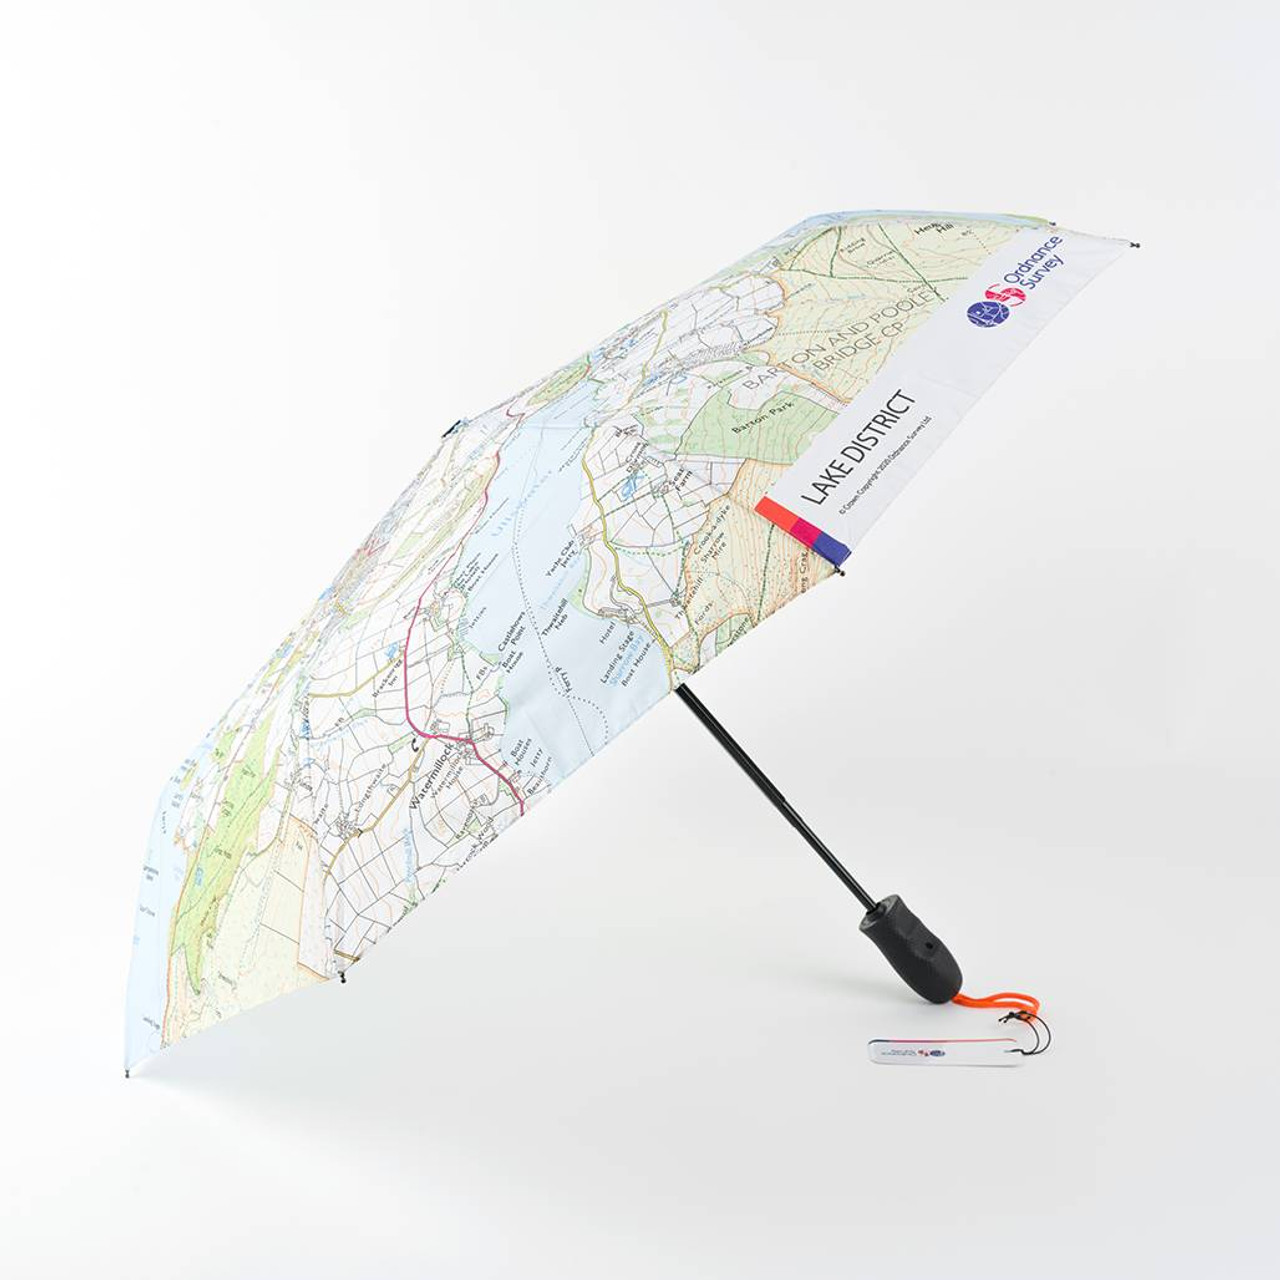 Os Lake District Umbrella